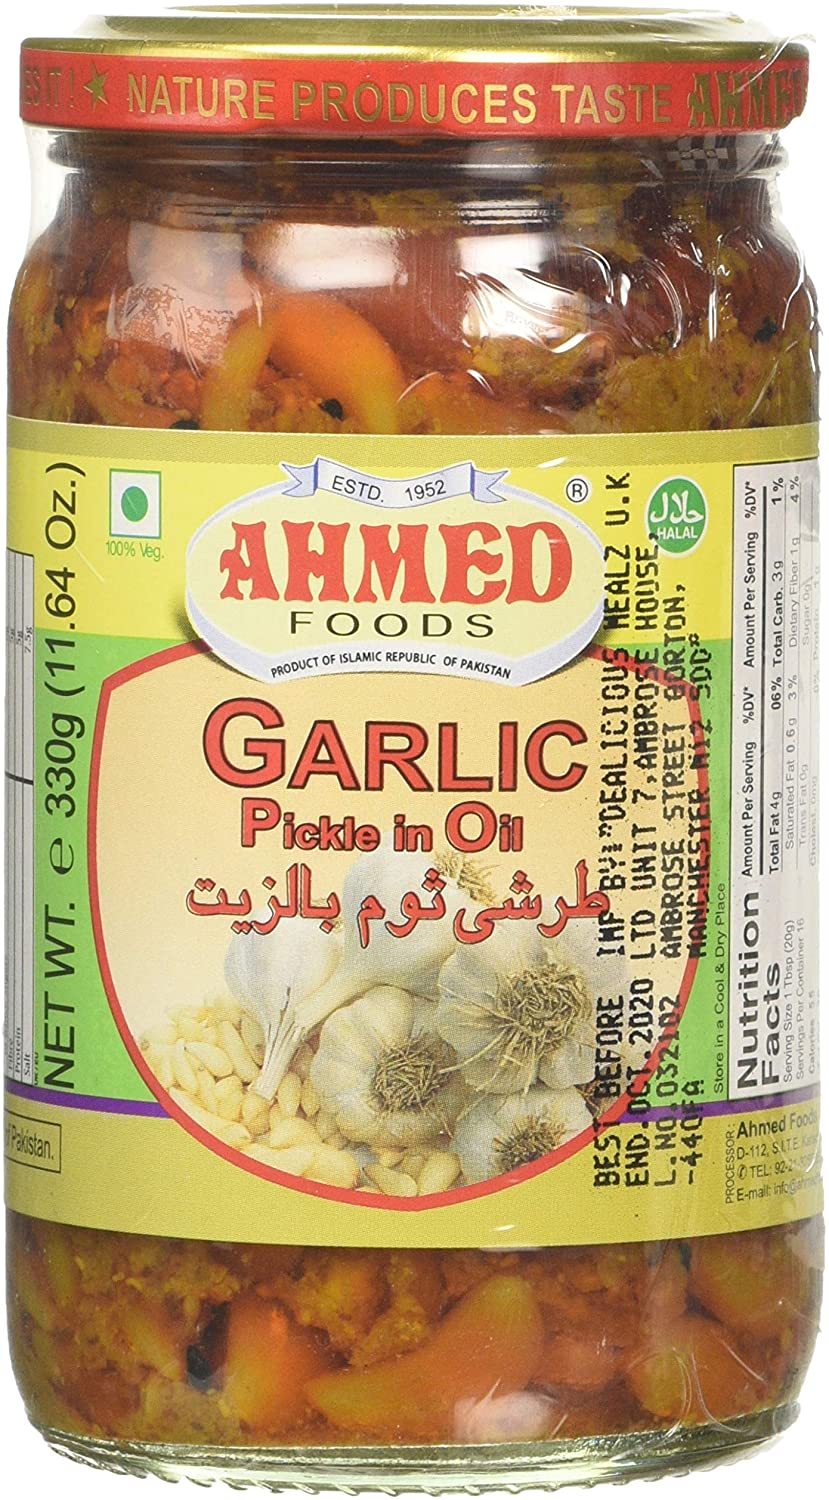 Ahmed garlic pickle SaveCo Online Ltd